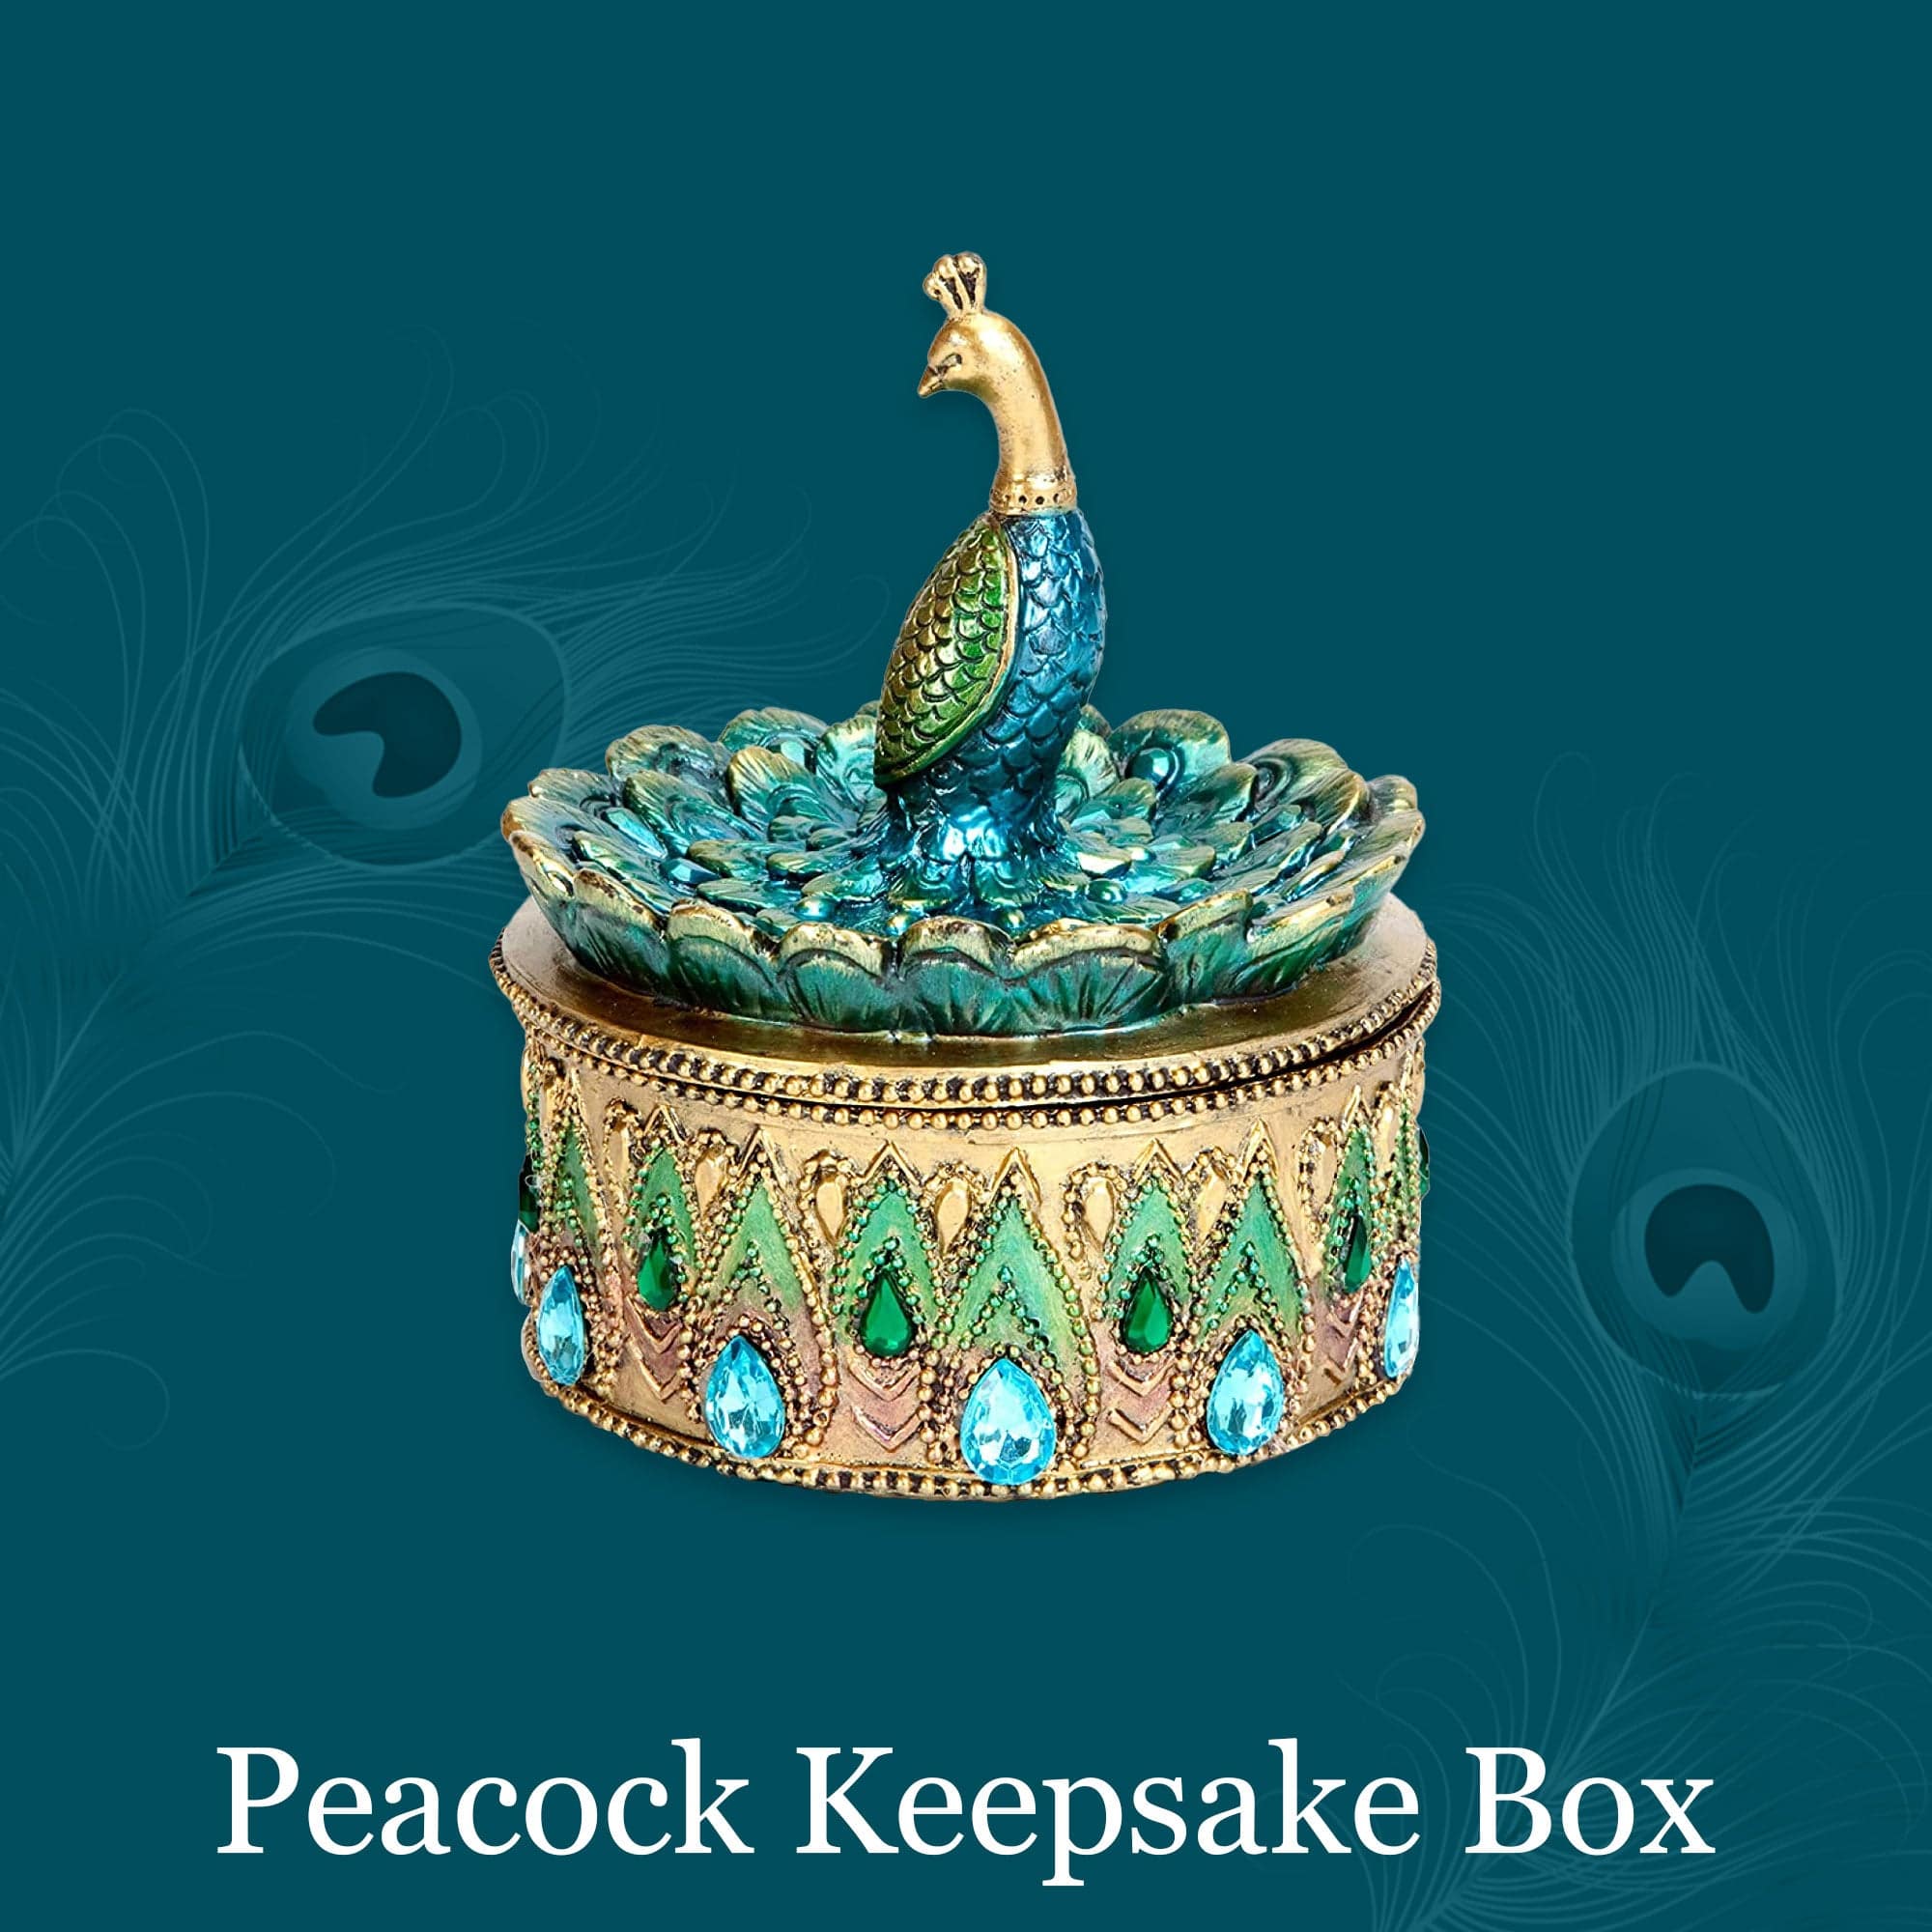 Peacock Keepsake Box - Peacock Art - Golden Jewelry Box. Great